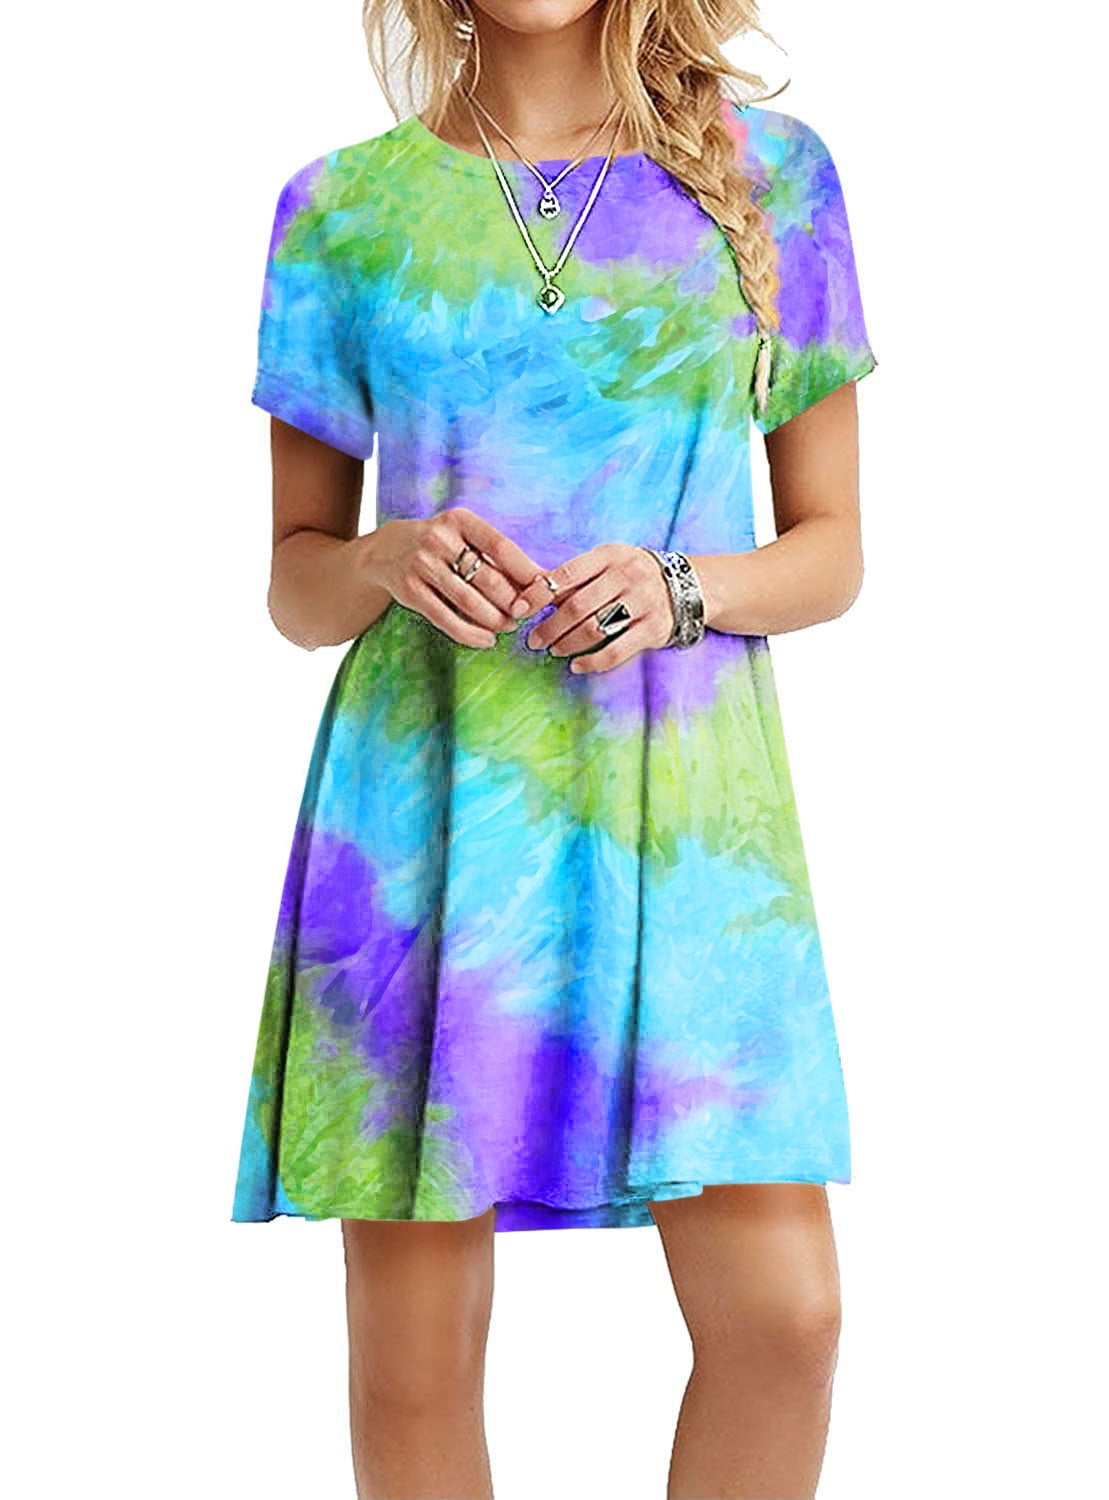 WISPR - Women's Slim-Fit Dazzling Rainbow Tie-Dye Printed Dress ...